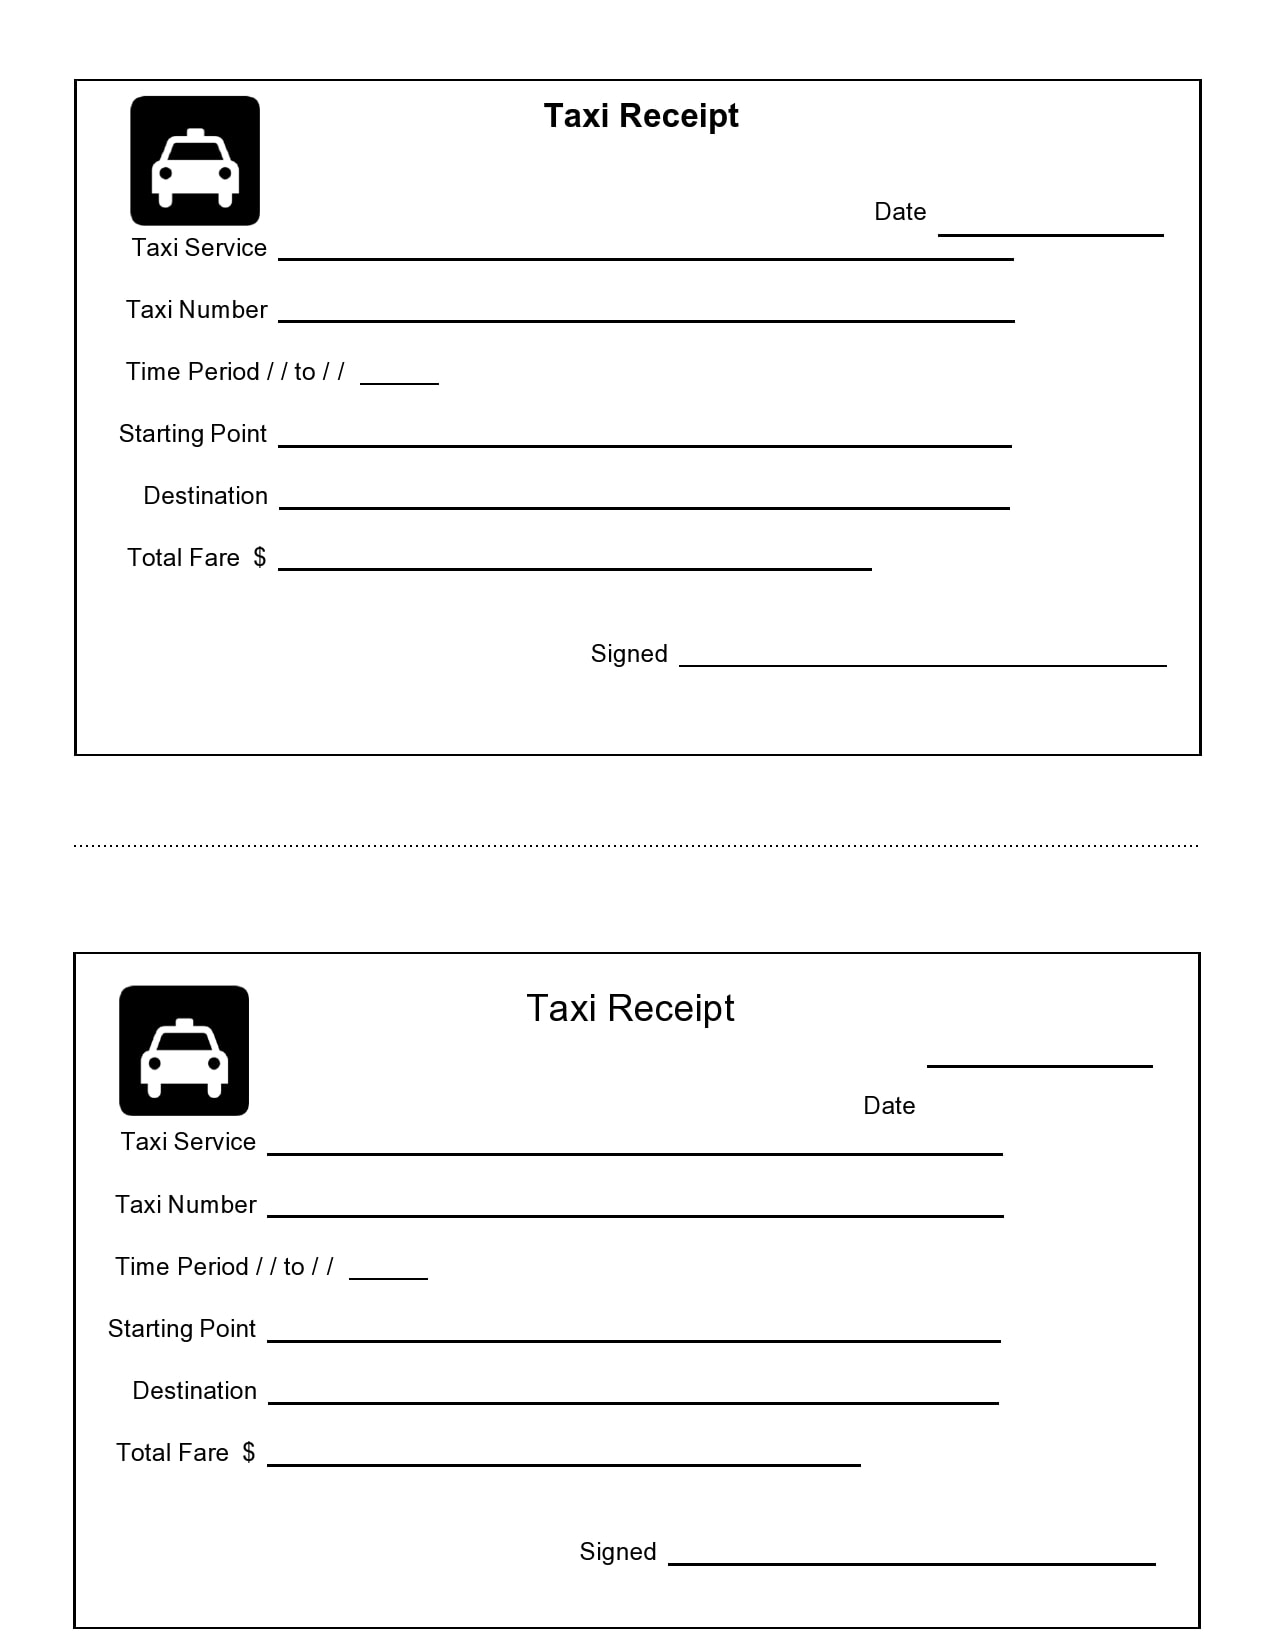 10 Blank Taxi Receipt Templates [Free] - TemplateArchive For Blank Taxi Receipt Template